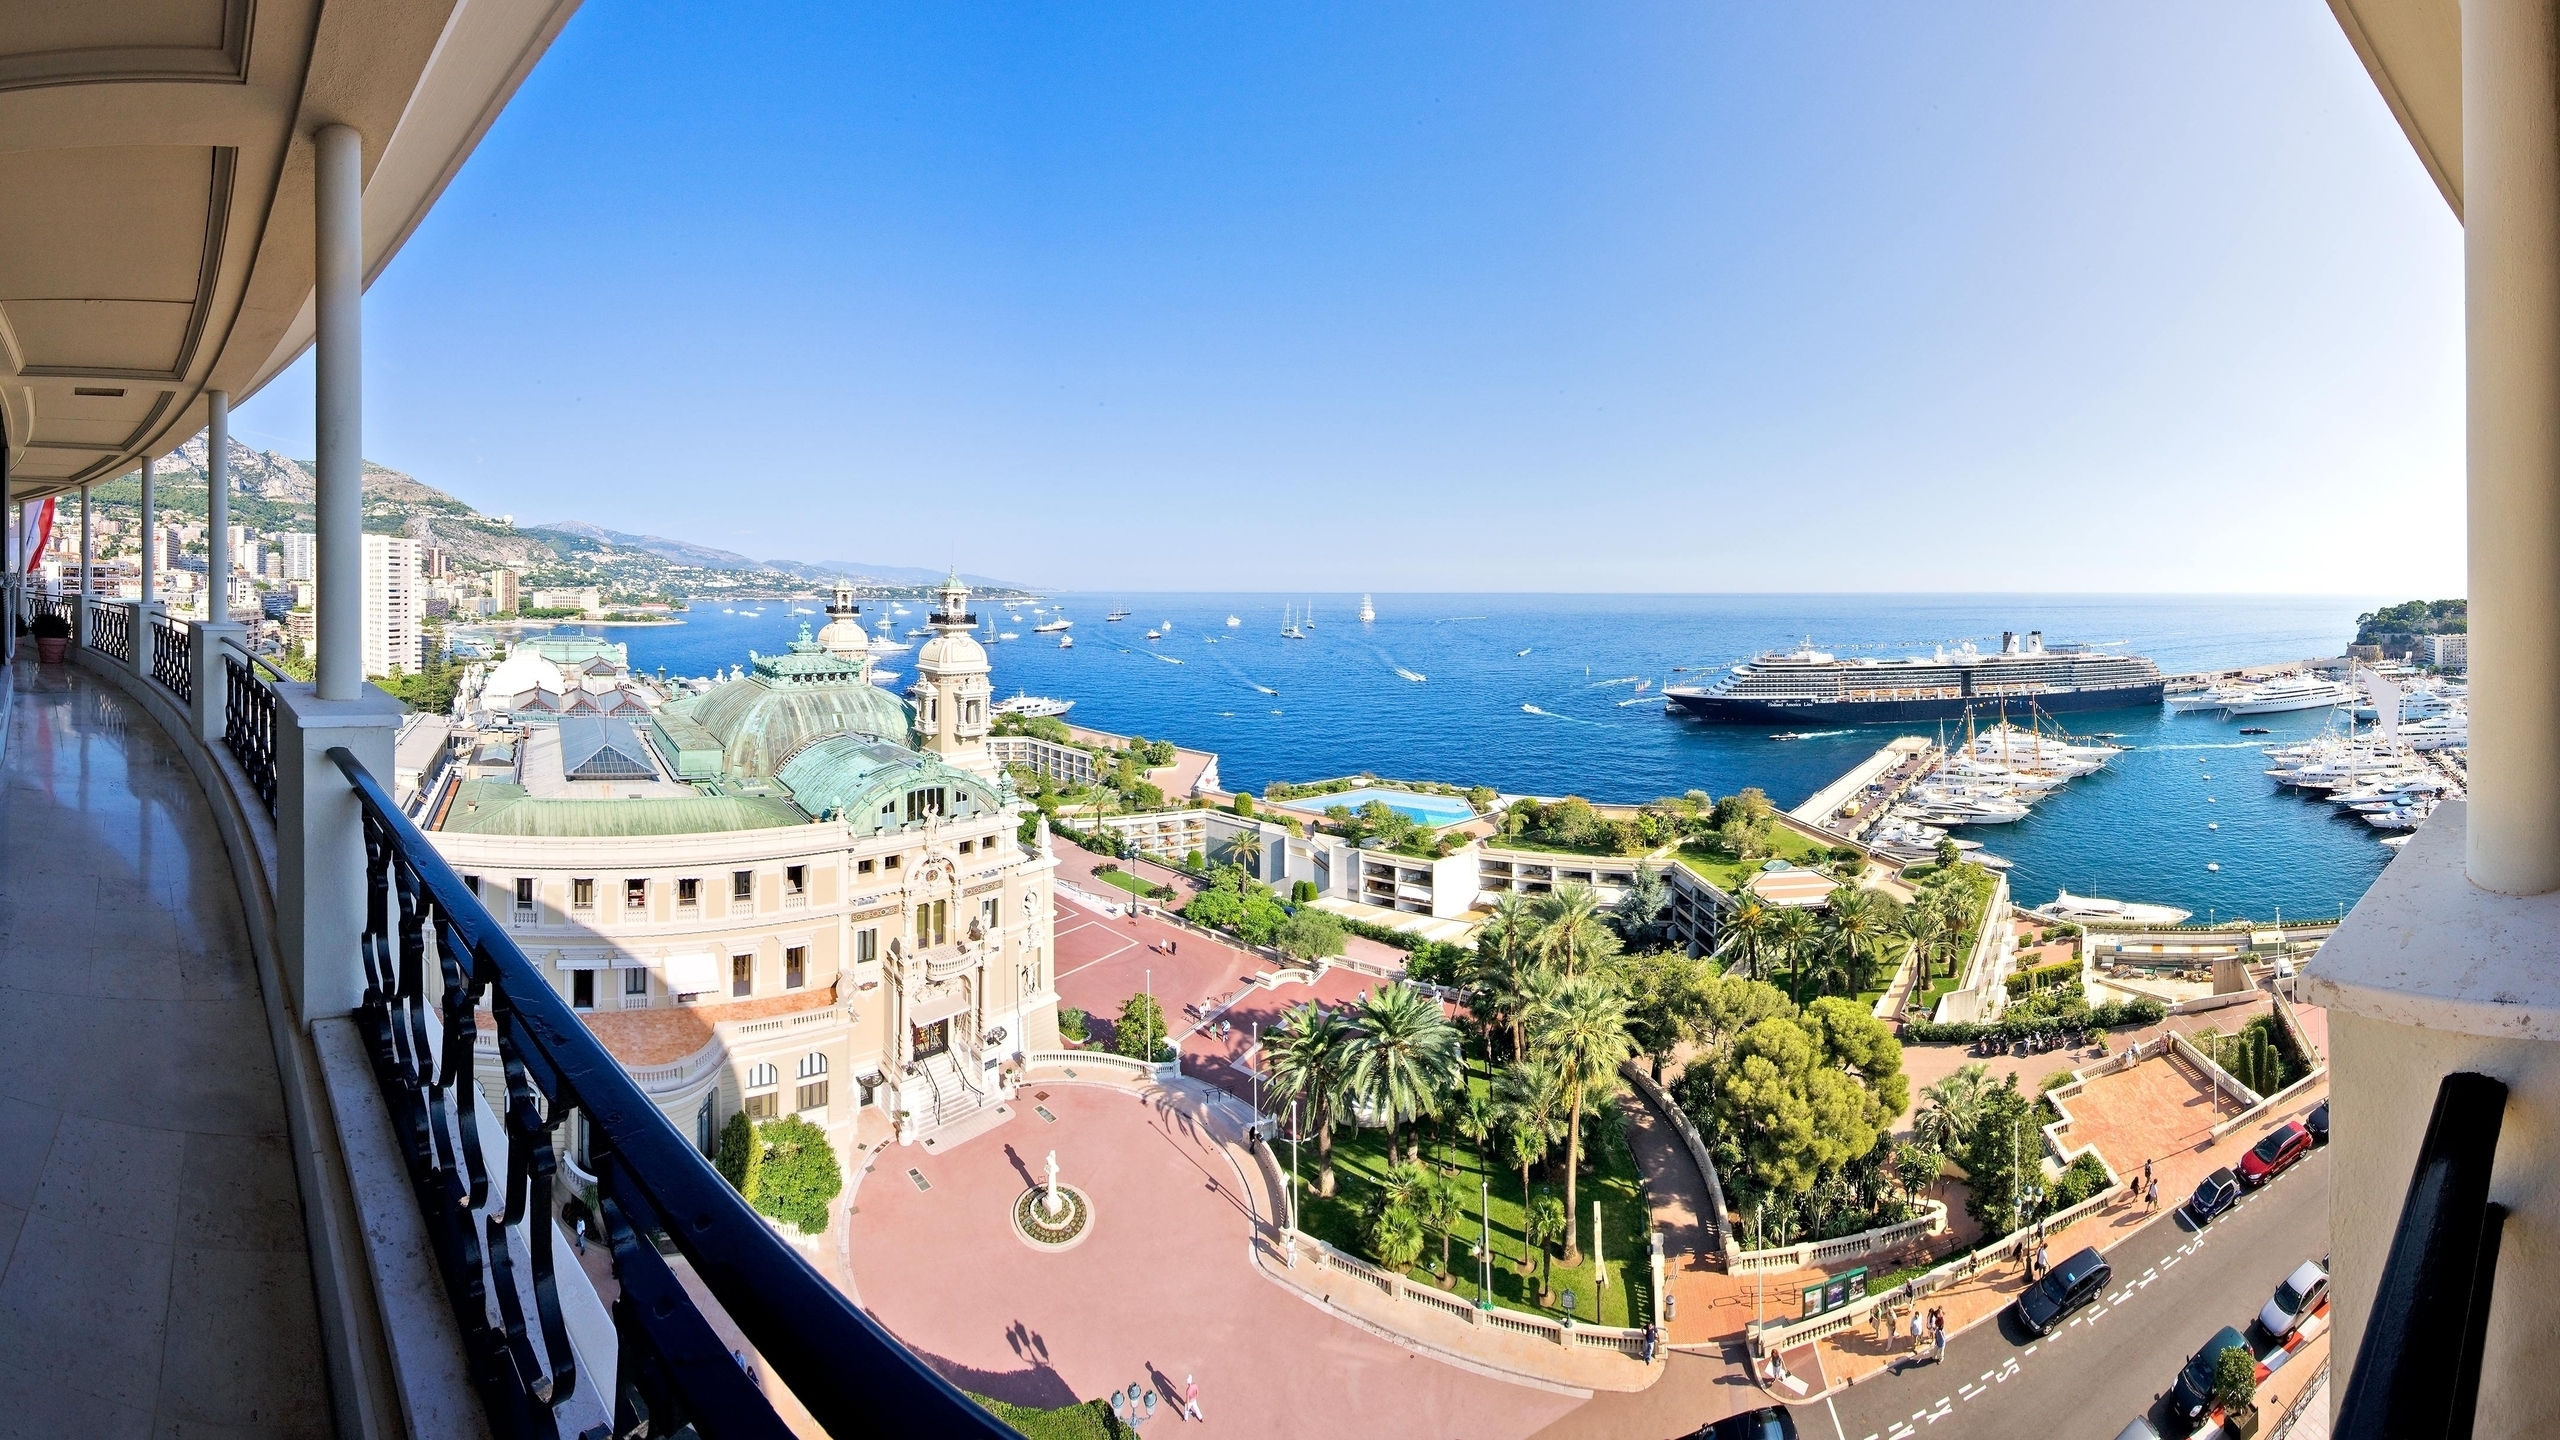 Monaco View for 2560x1440 HDTV resolution